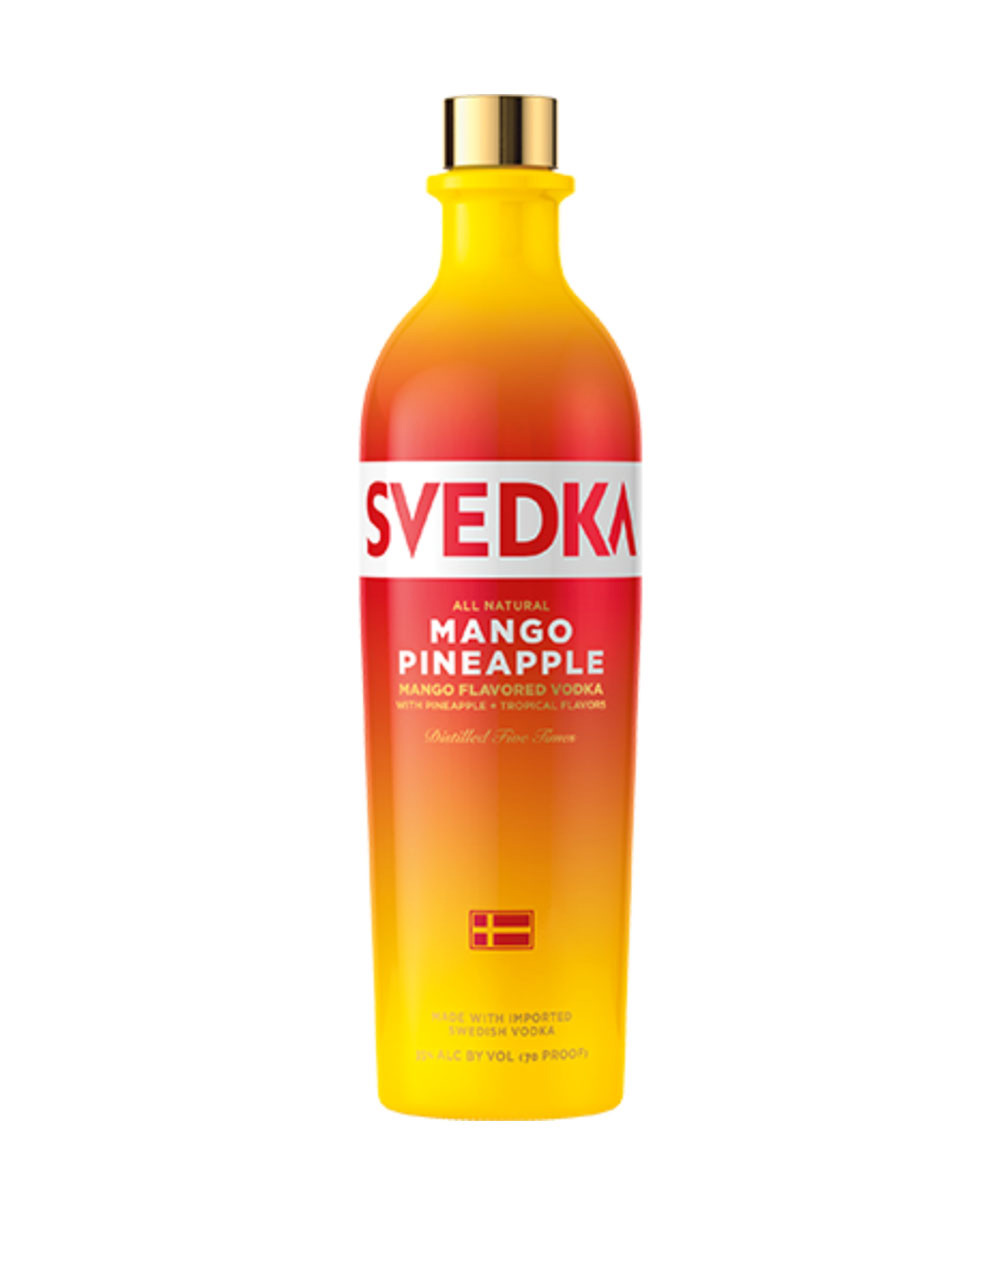 Svedka Mango Pineapple Vodka